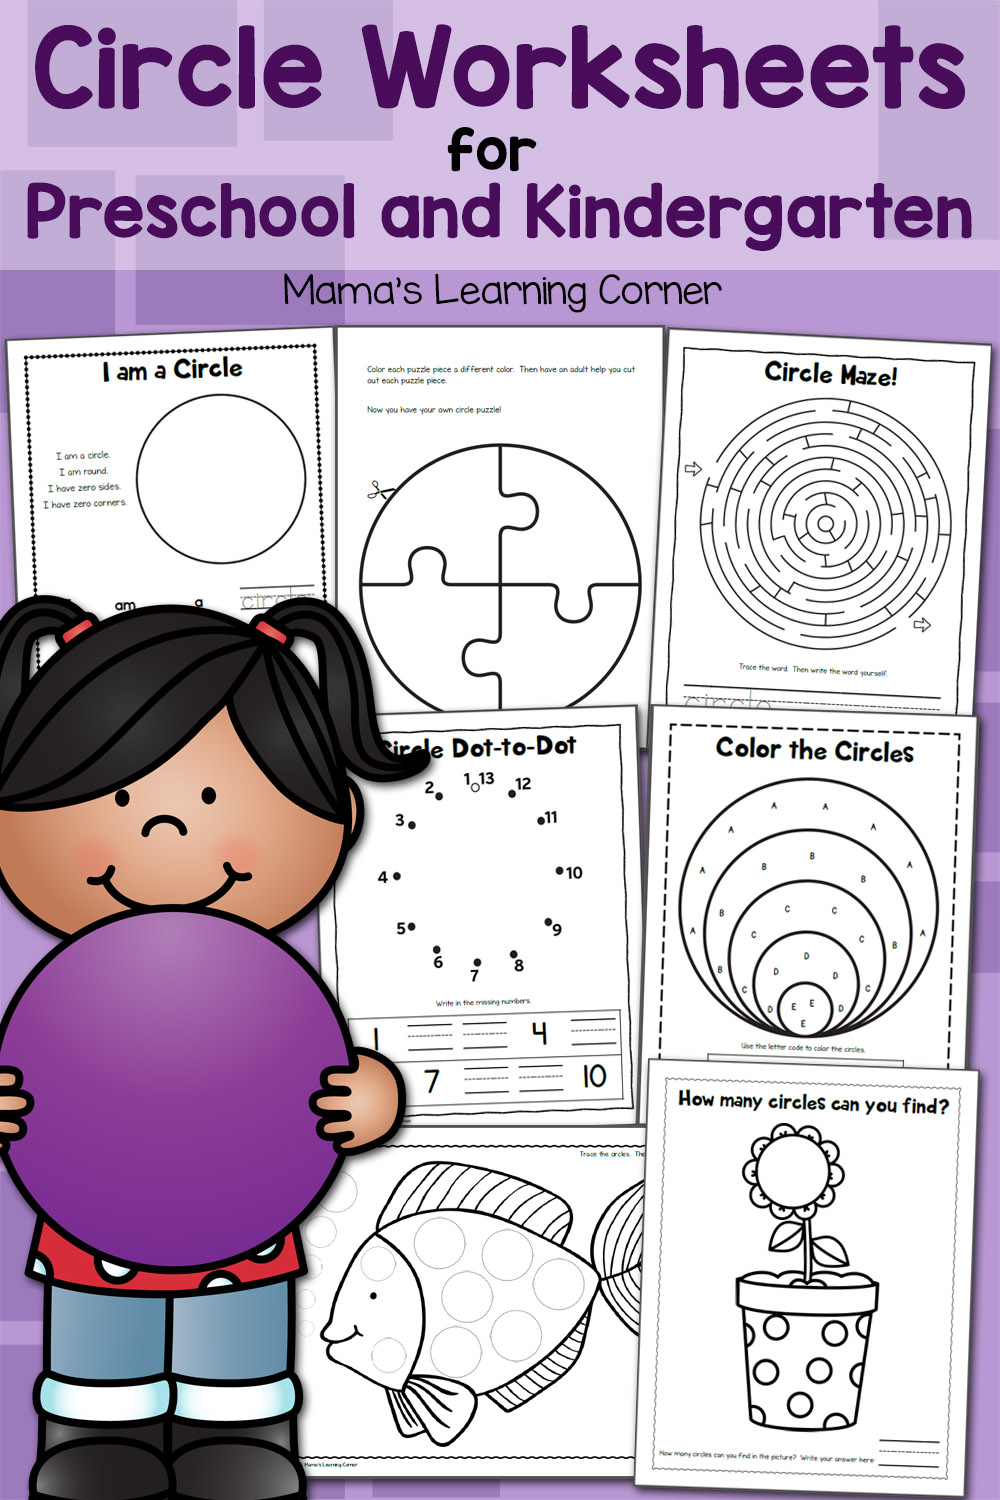 circle-worksheets-for-preschool-and-kindergarten-mamas-learning-corner